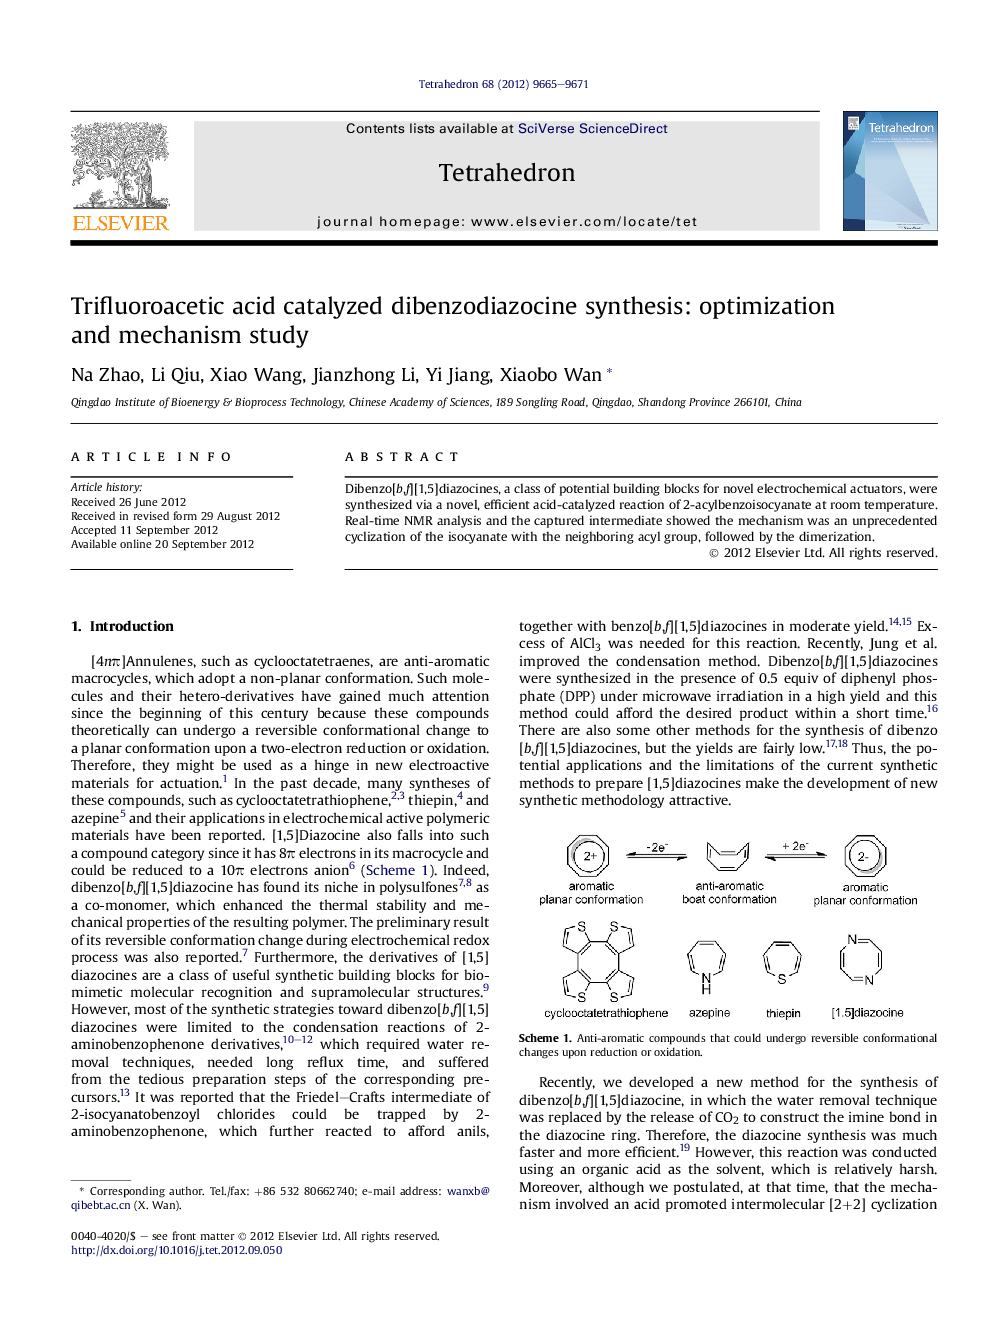 Trifluoroacetic acid catalyzed dibenzodiazocine synthesis: optimization and mechanism study